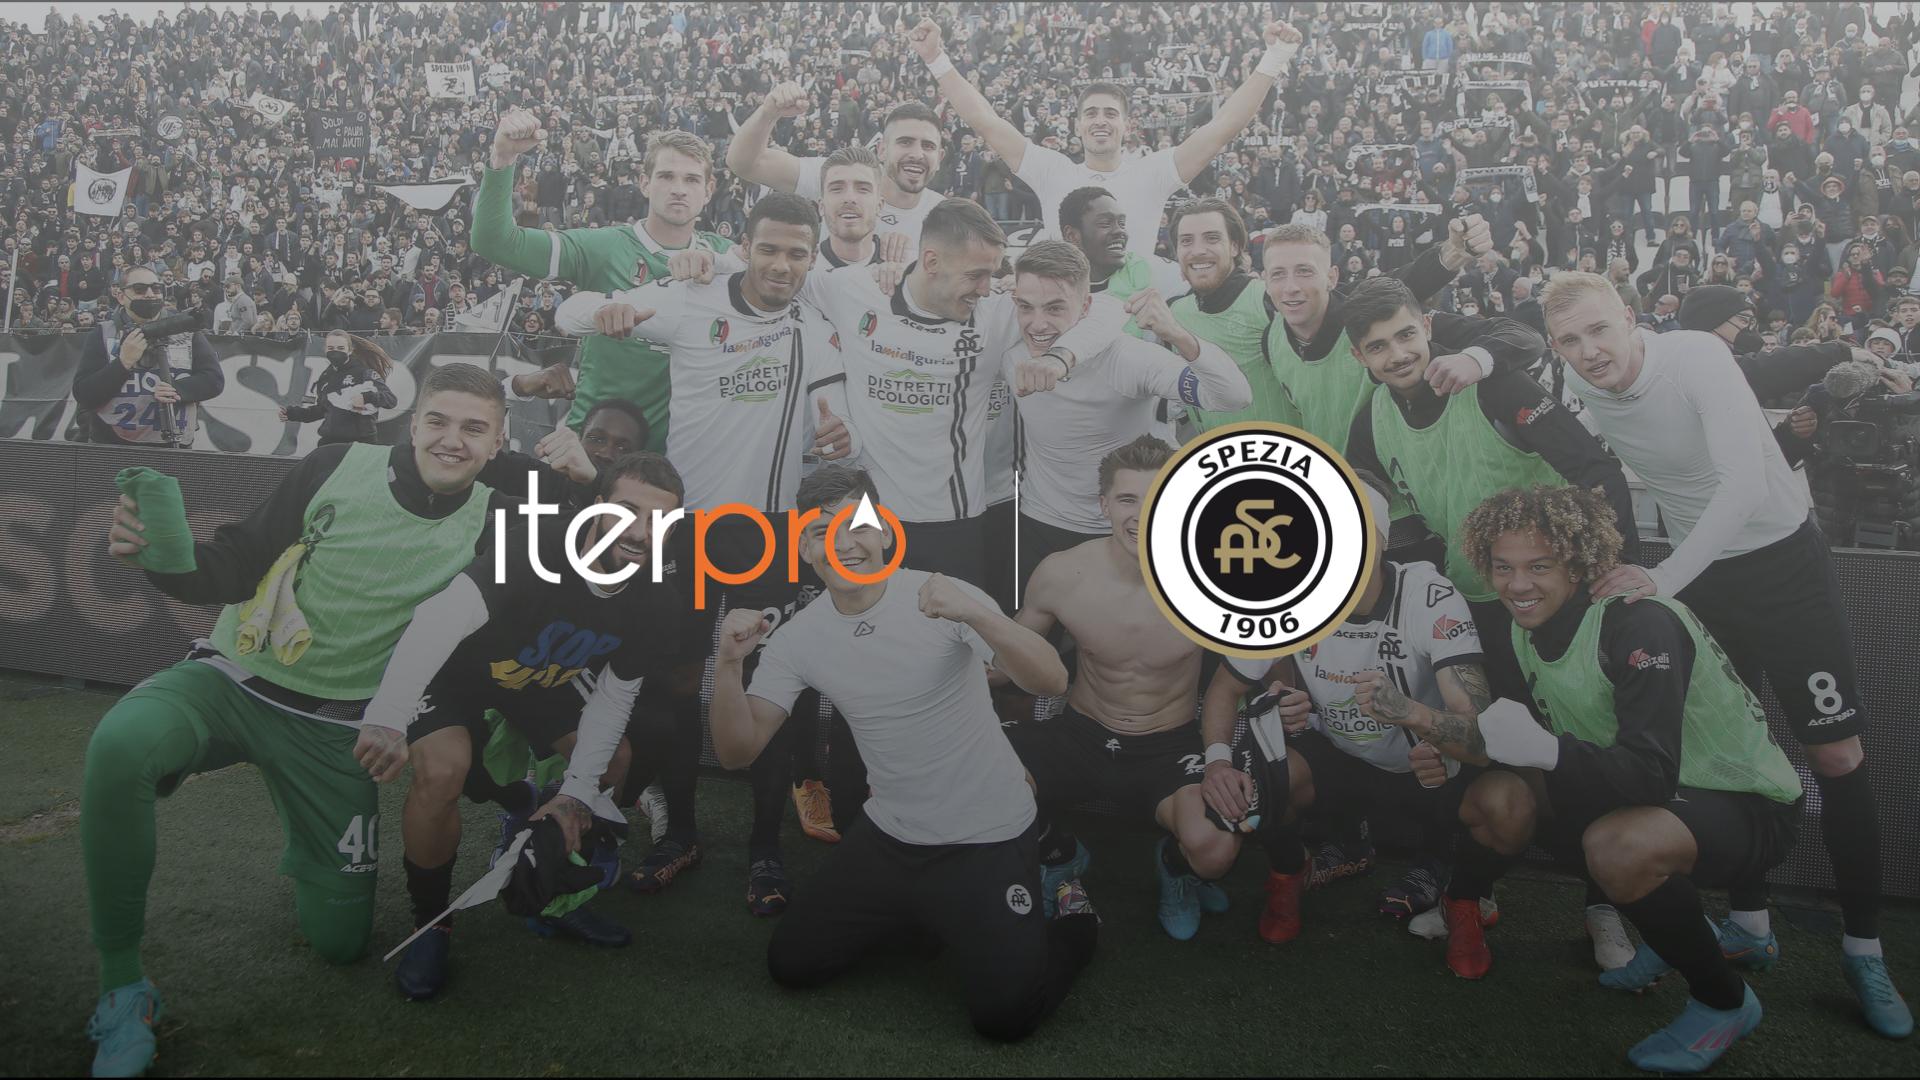 Multi-year agreement between Spezia Calcio and the Football Intelligence platform Iterpro